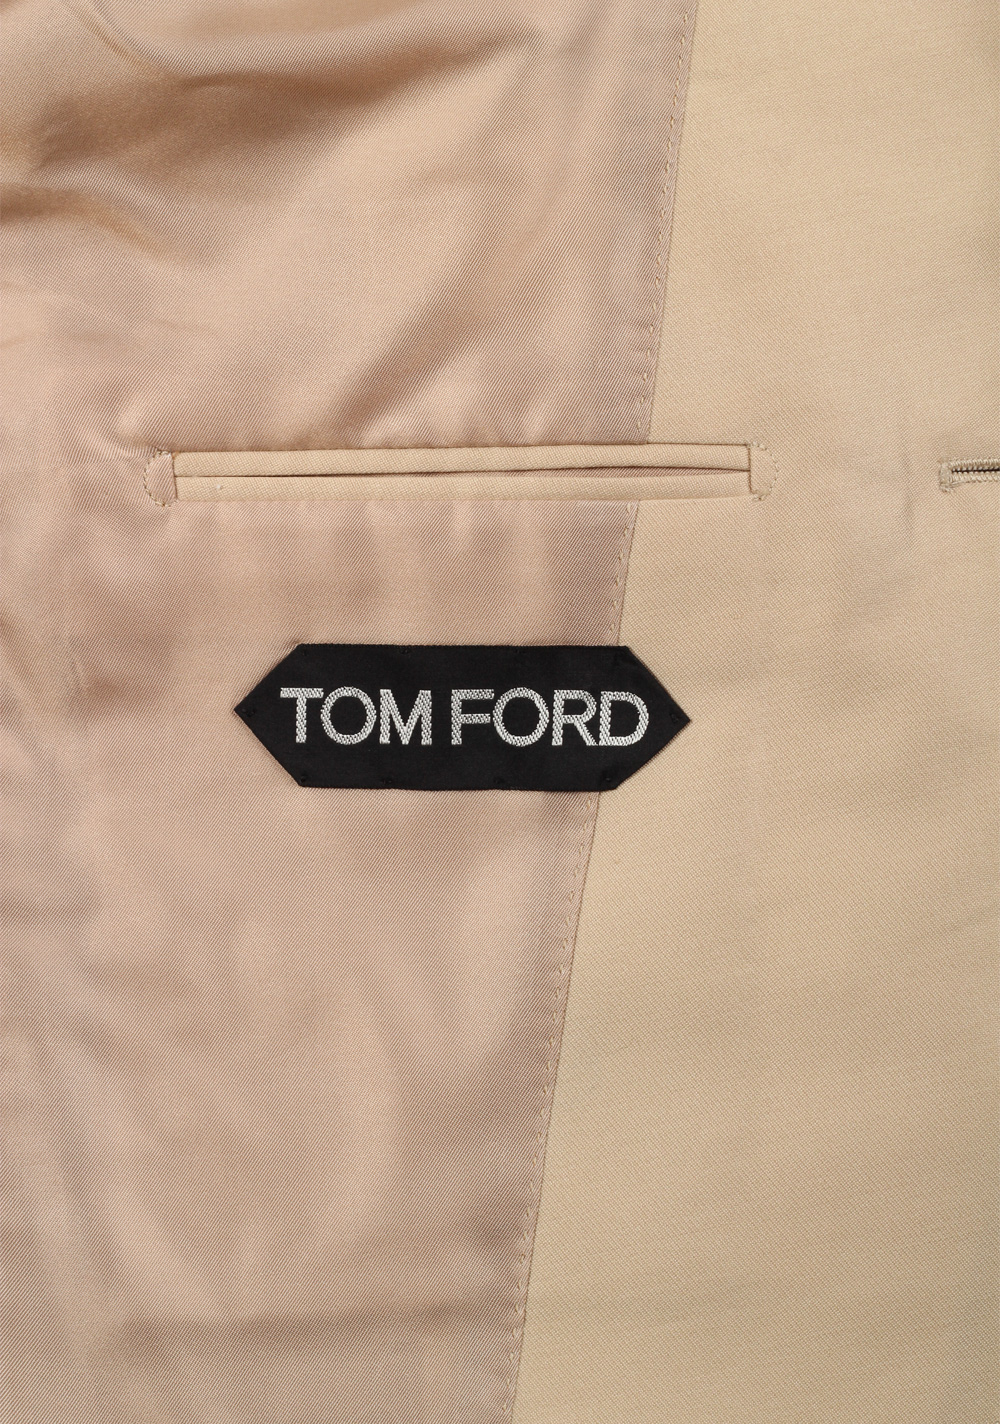 TOM FORD Atticus Beige  Sport Coat Size 46 / 36R U.S. | Costume Limité